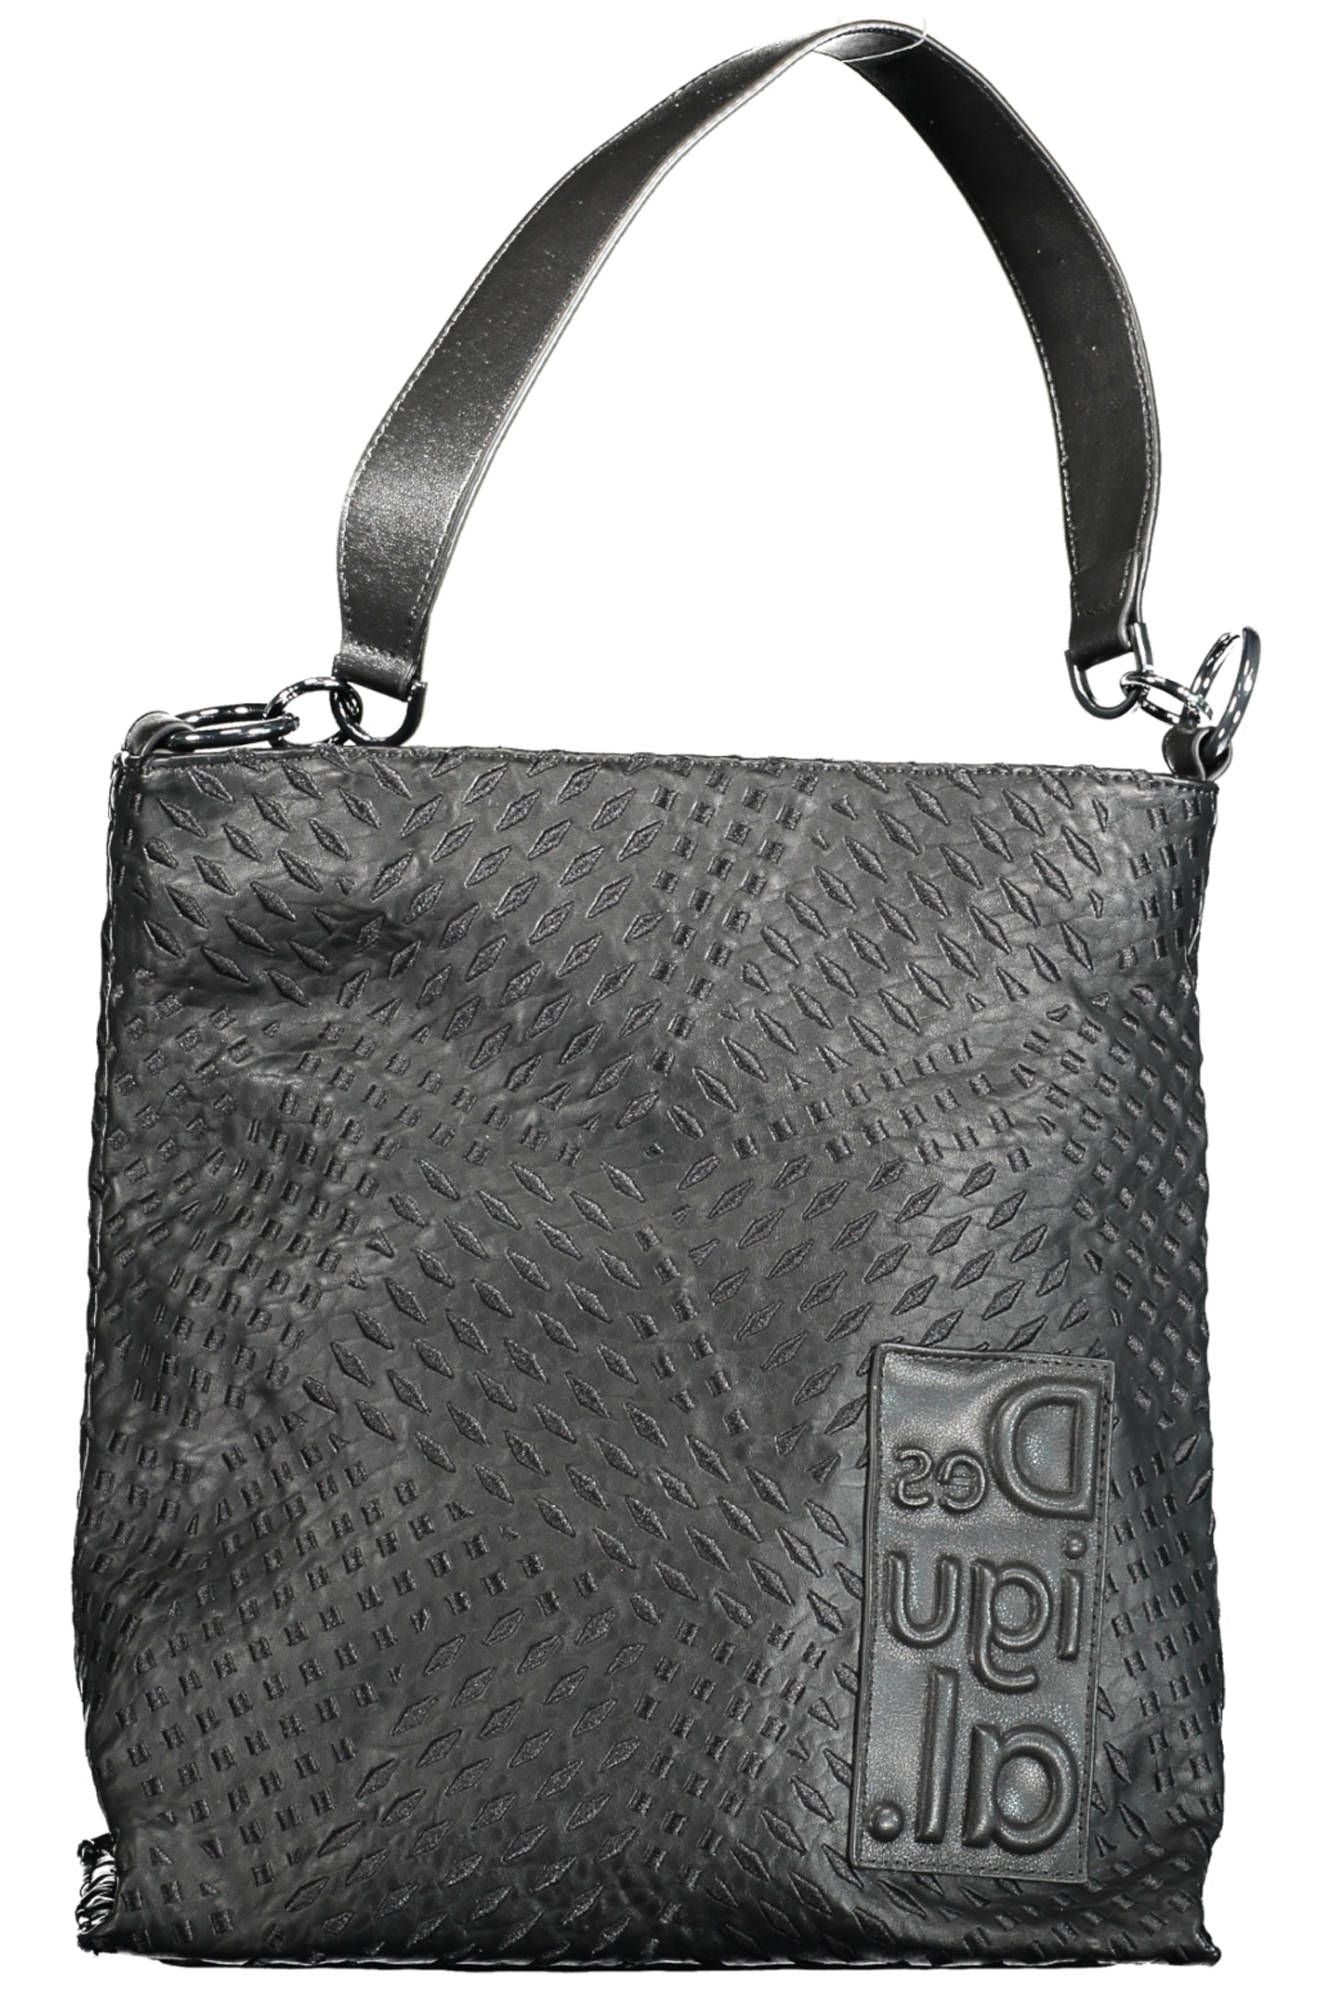 Desigual Black Polyurethane Handbag - Walbiz.com